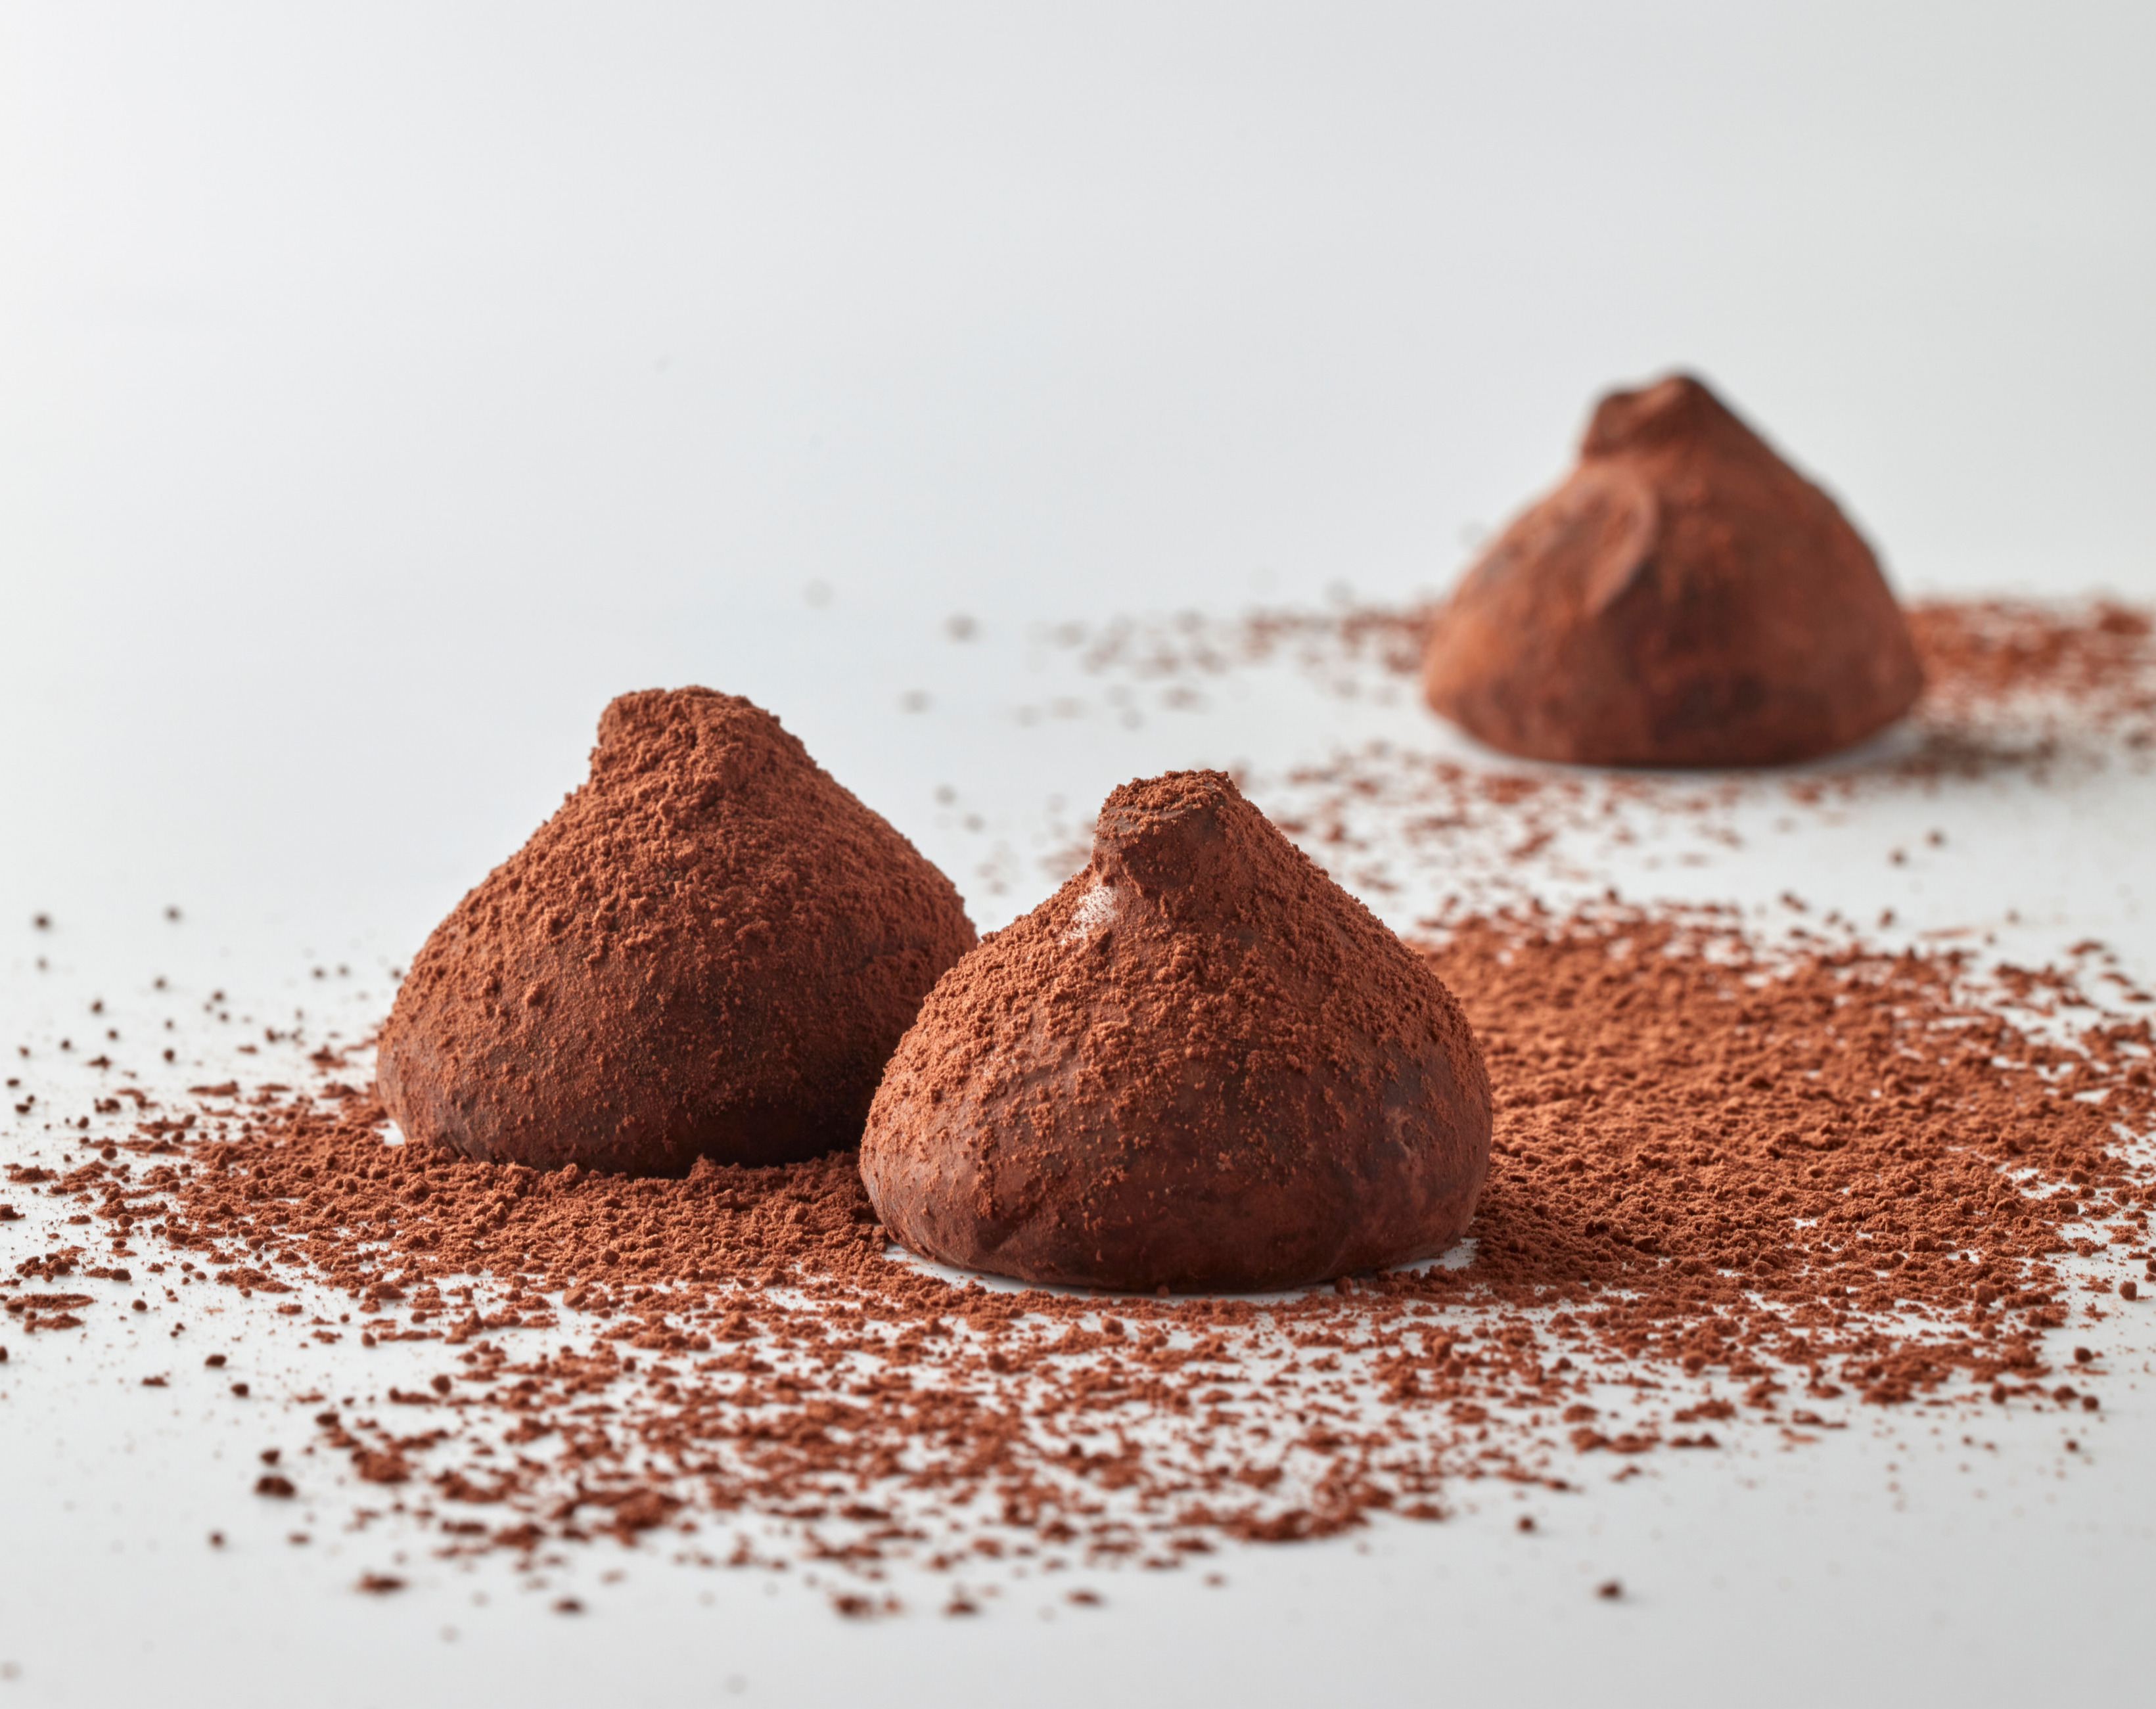 202302-belgian-chocolat-truffel-0487-belgianchocolategroup.jpg